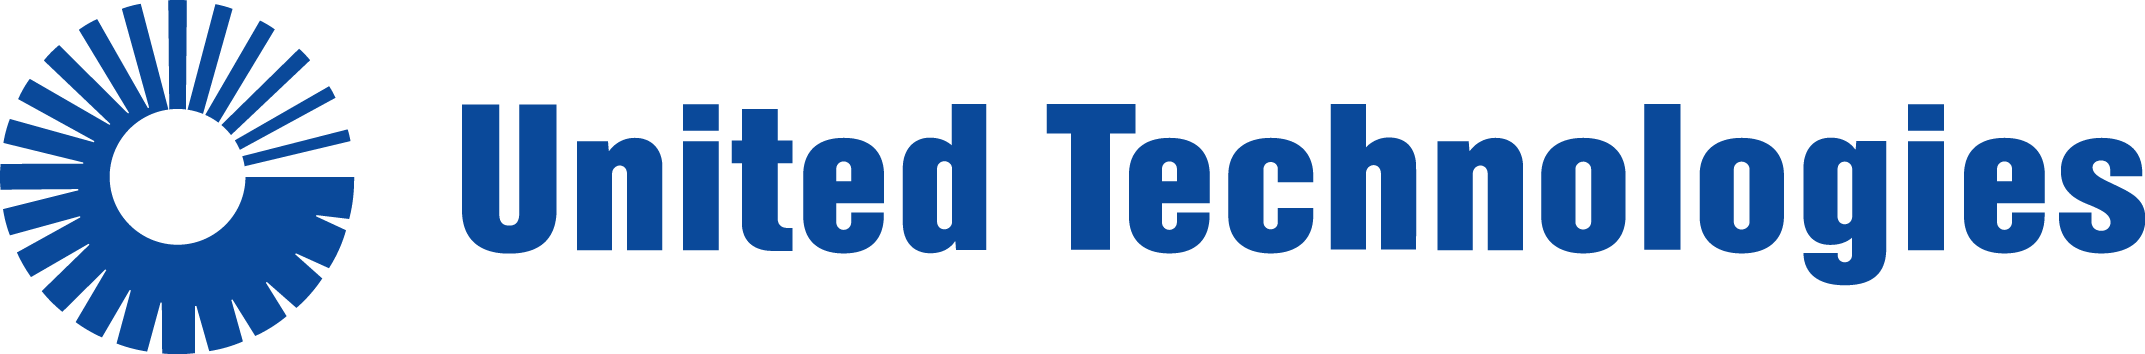 United Technologies Logo - United Technologies Corporation